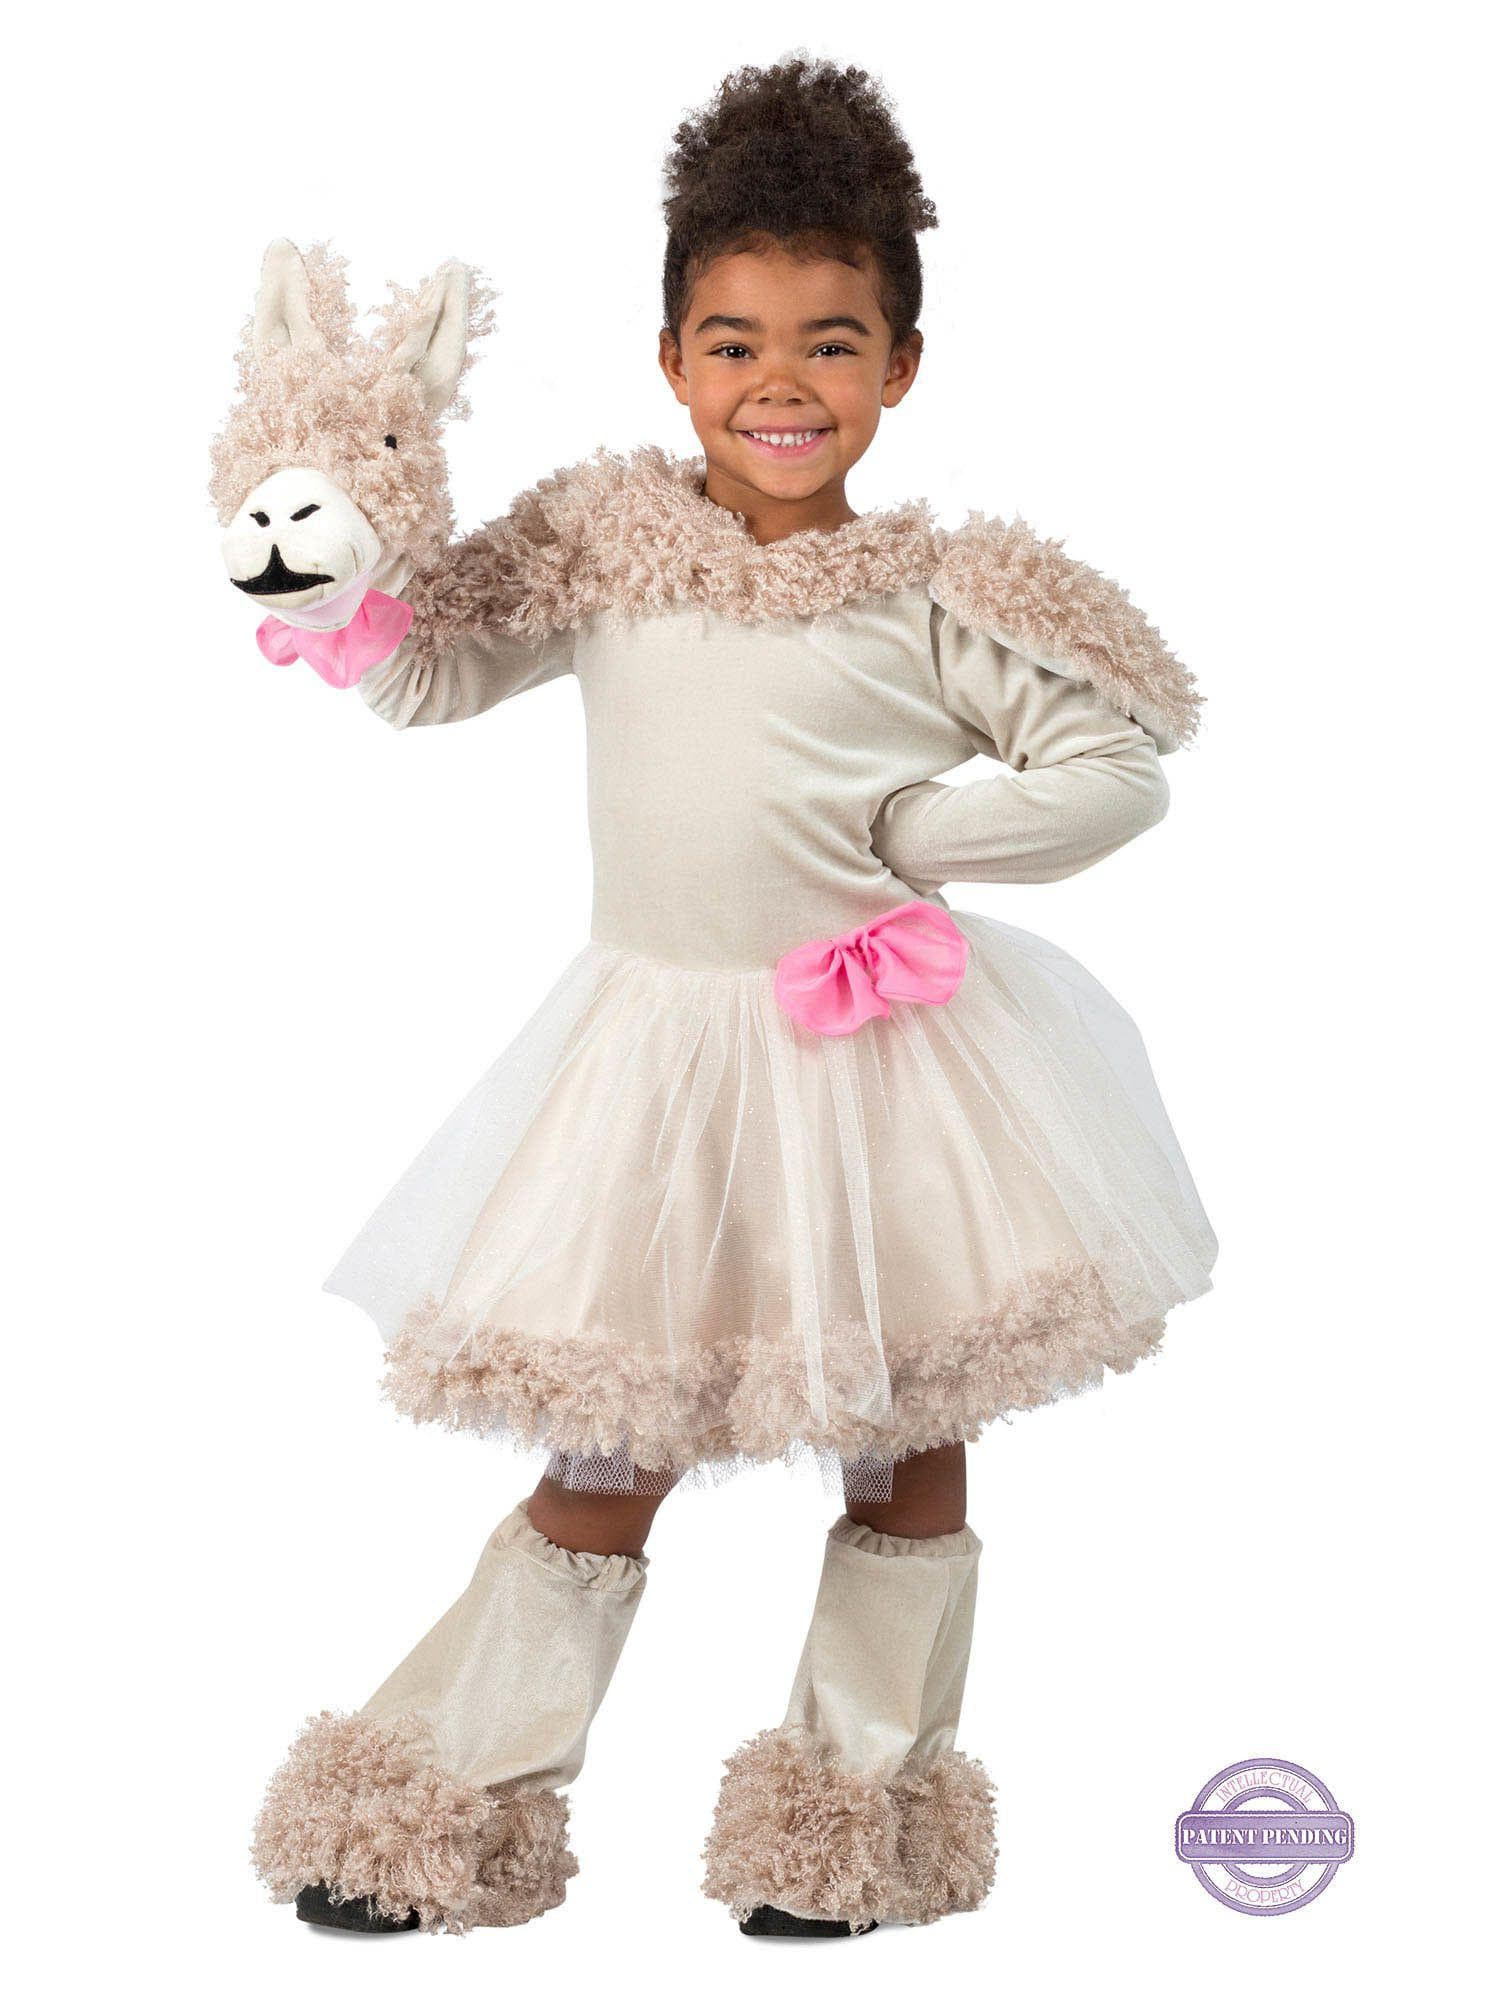 Kid's Playful Puppet Llama Costume - costumes.com